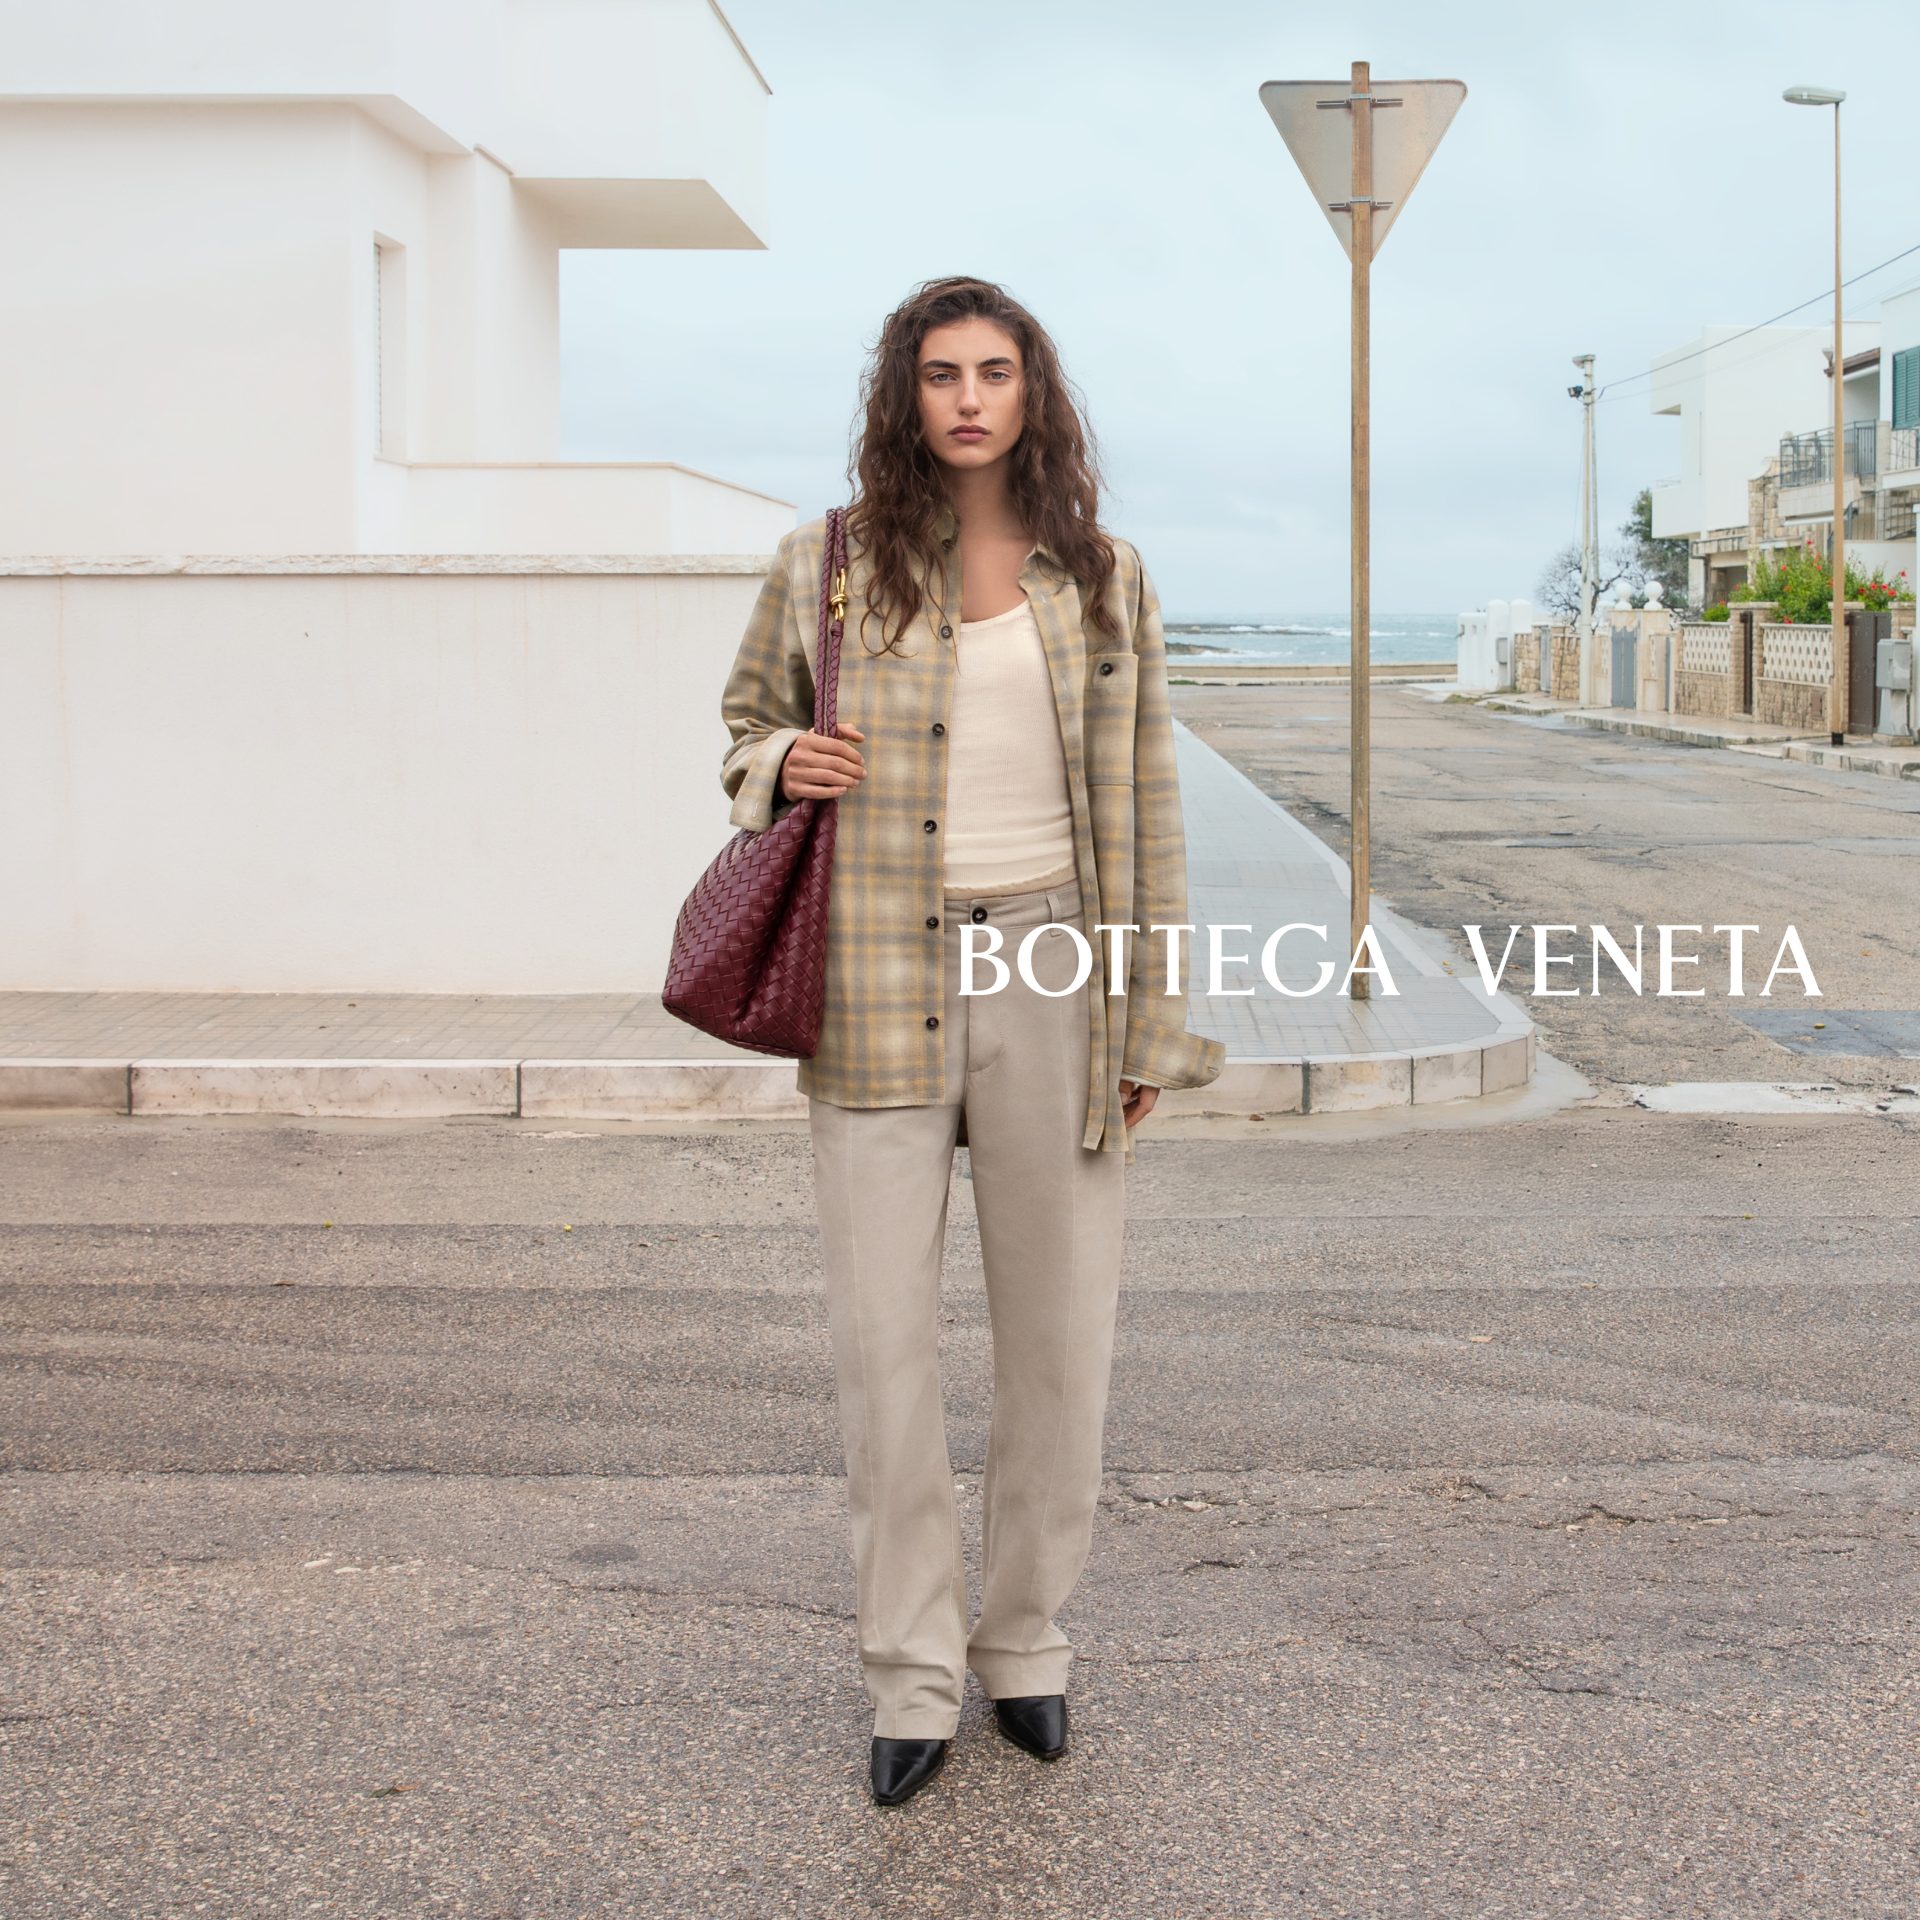 Bottega Veneta Launches Paper Shoulder Pouch